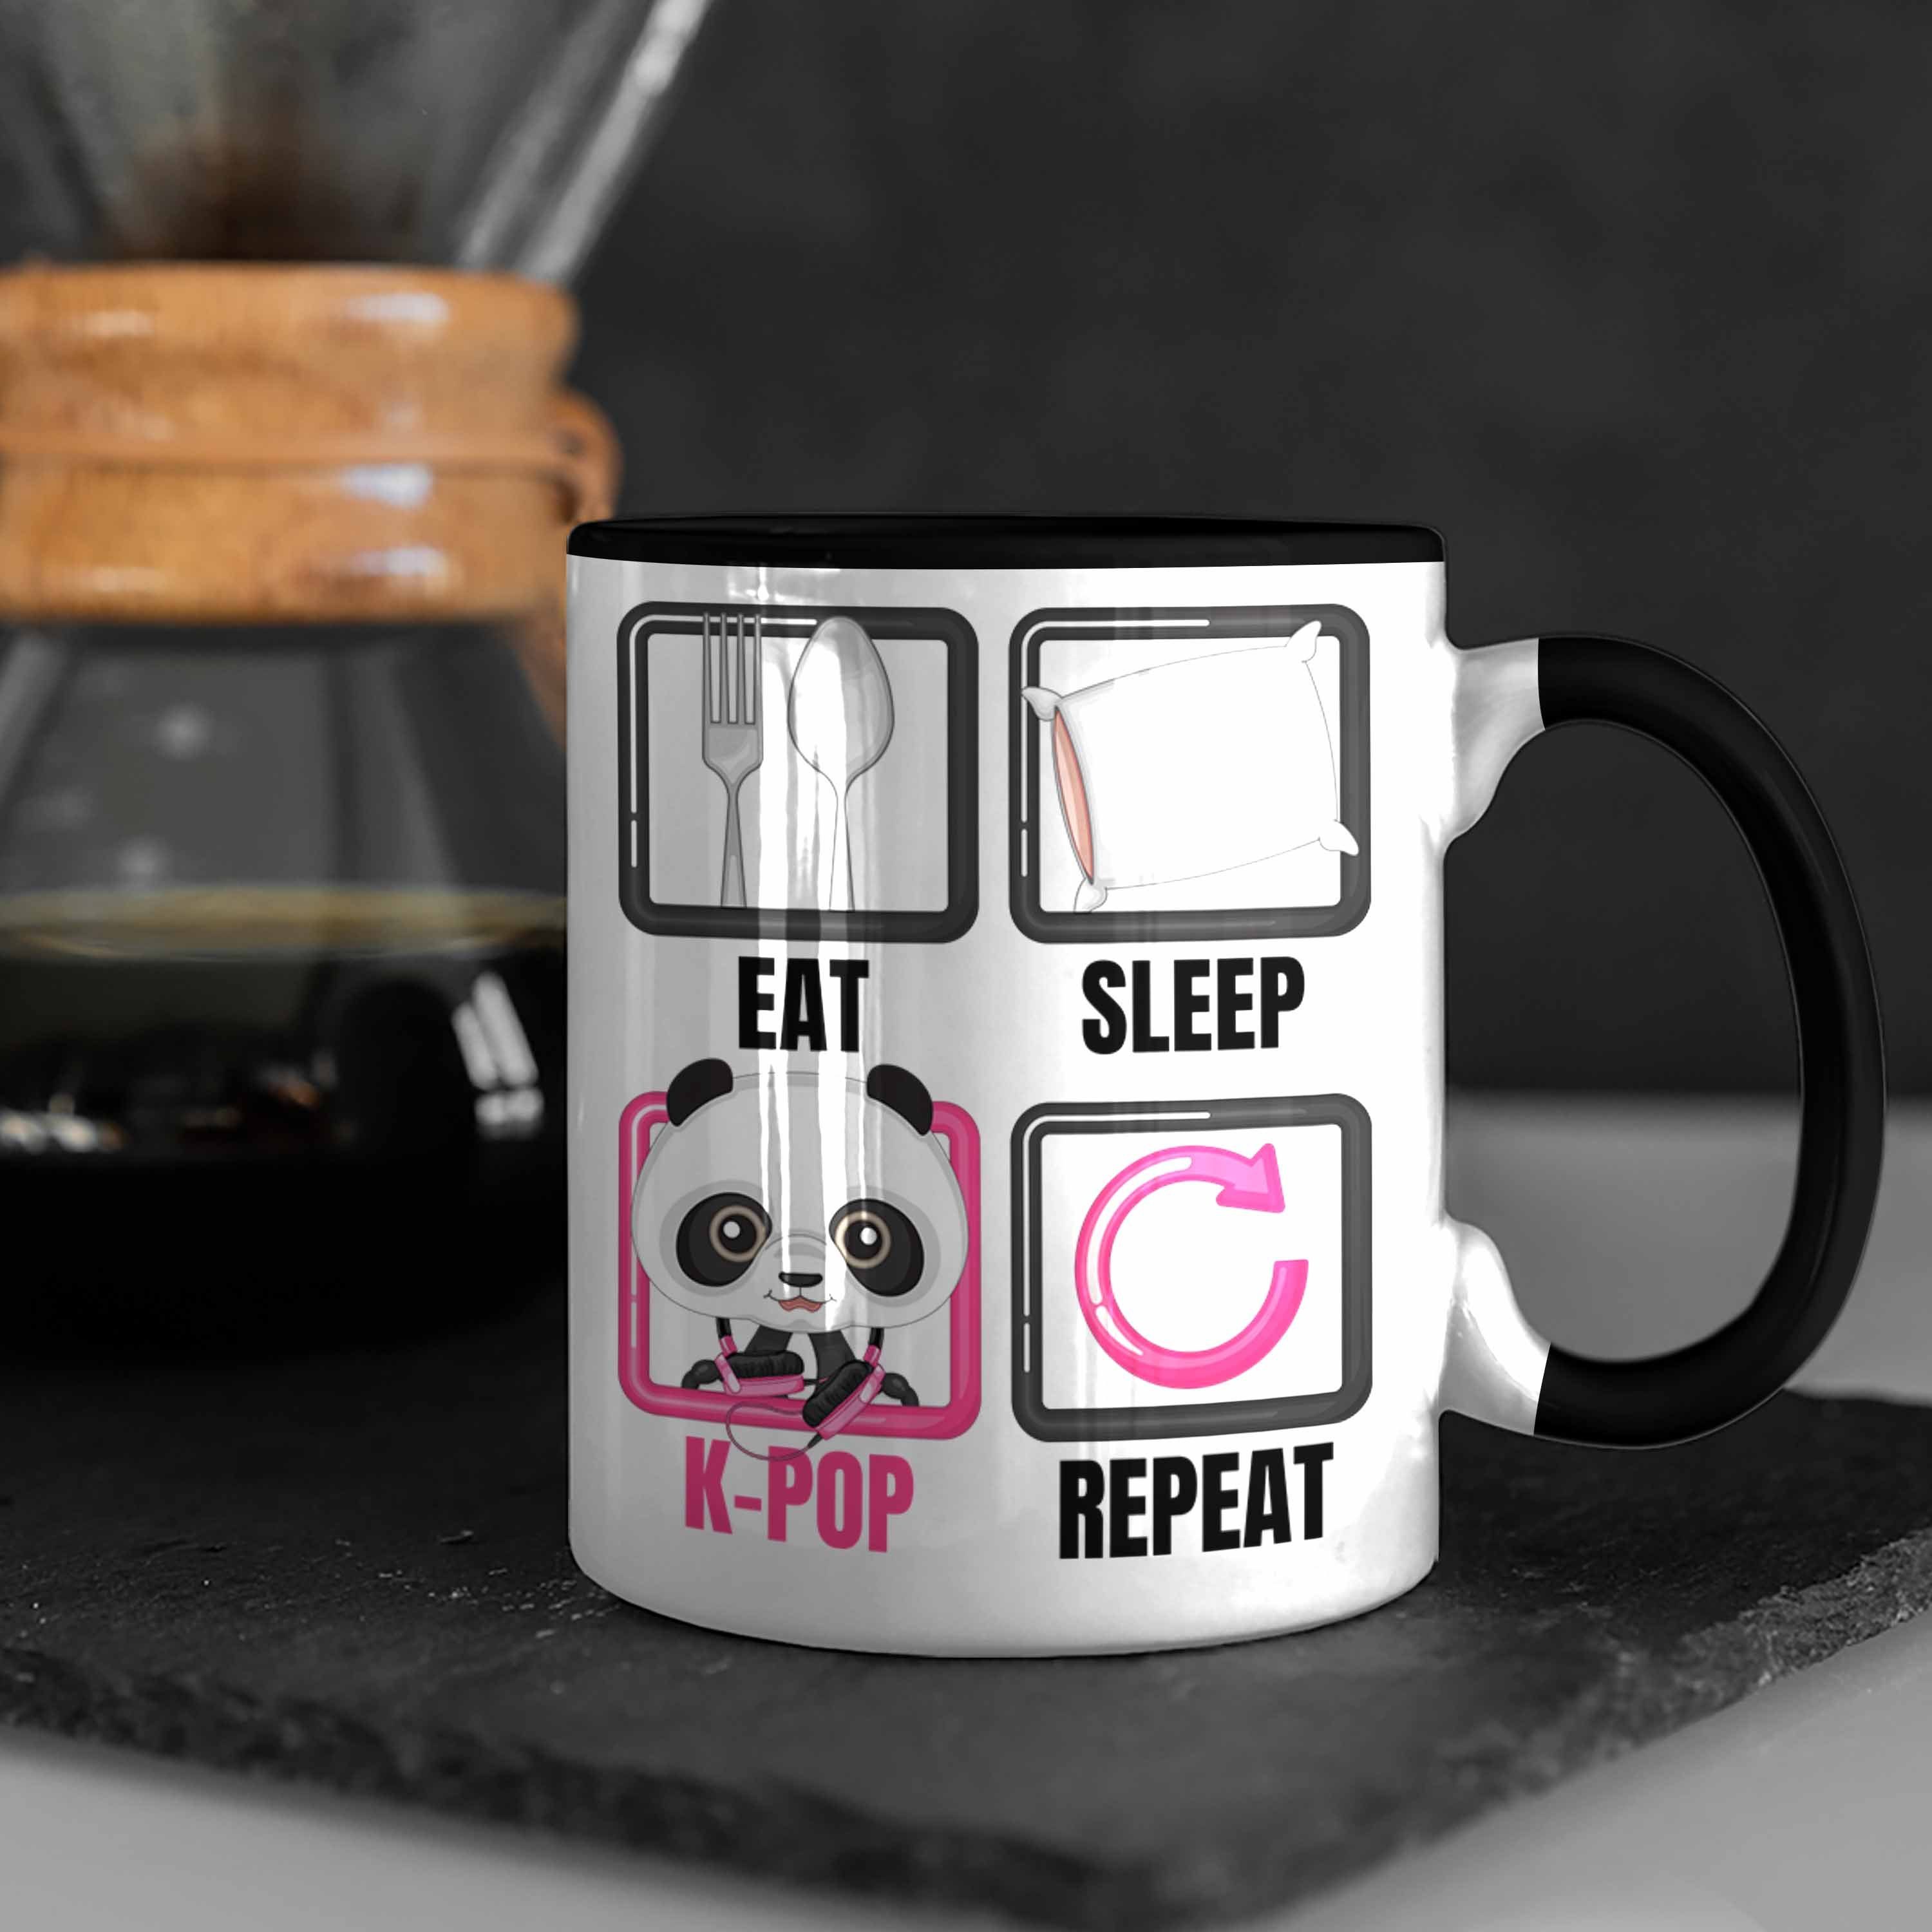 Trendation Tasse Eat Schwarz Musik Geschenkidee Sleep Tasse Koreanische K-Pop Kpop Geschenk Spr